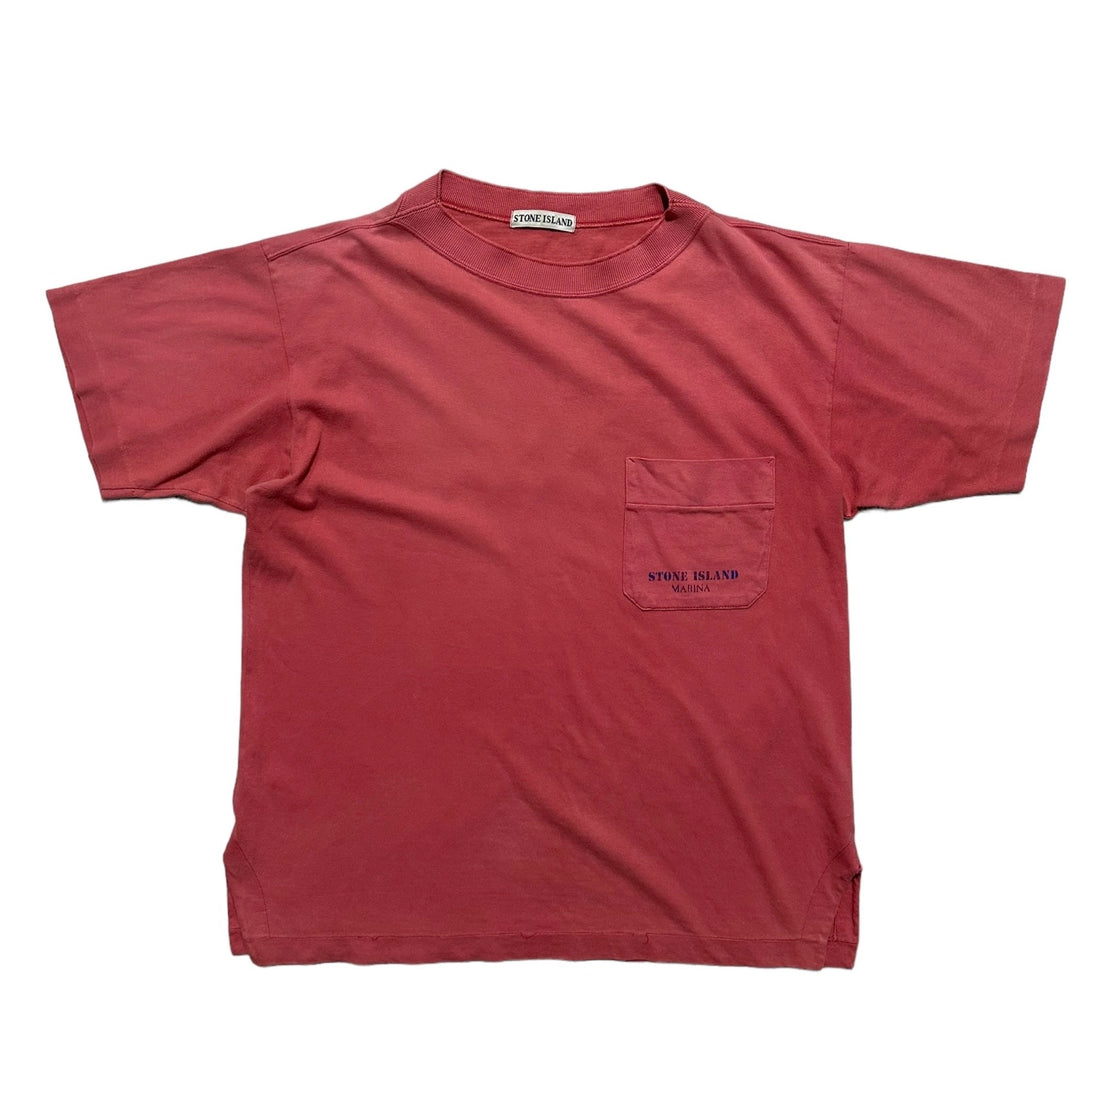 Stone Island 80's Reflective T-Shirt